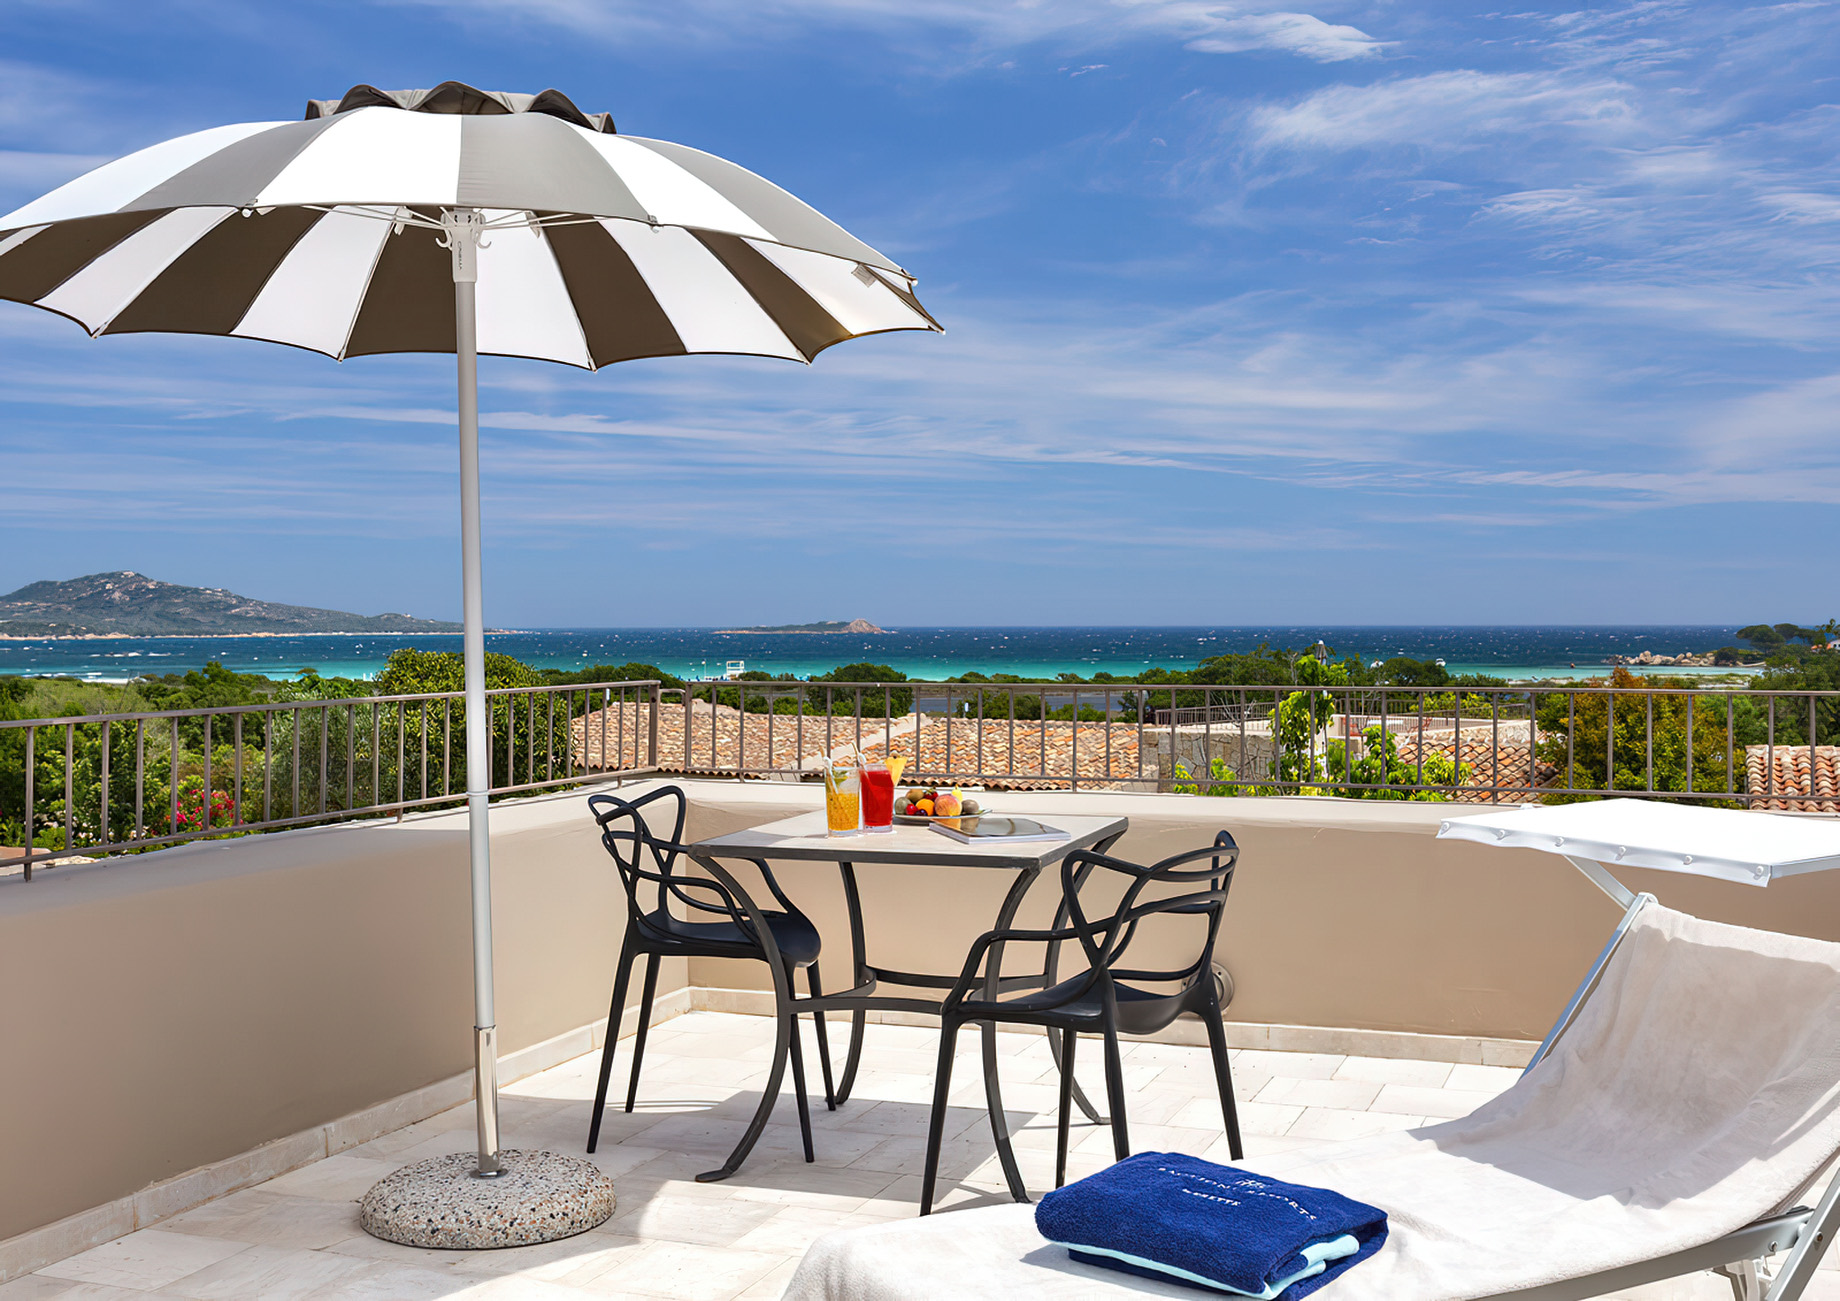 Baglioni Resort Sardinia – San Teodoro, Sardegna, Italy – Rooftop Terrace Suite Ocean View